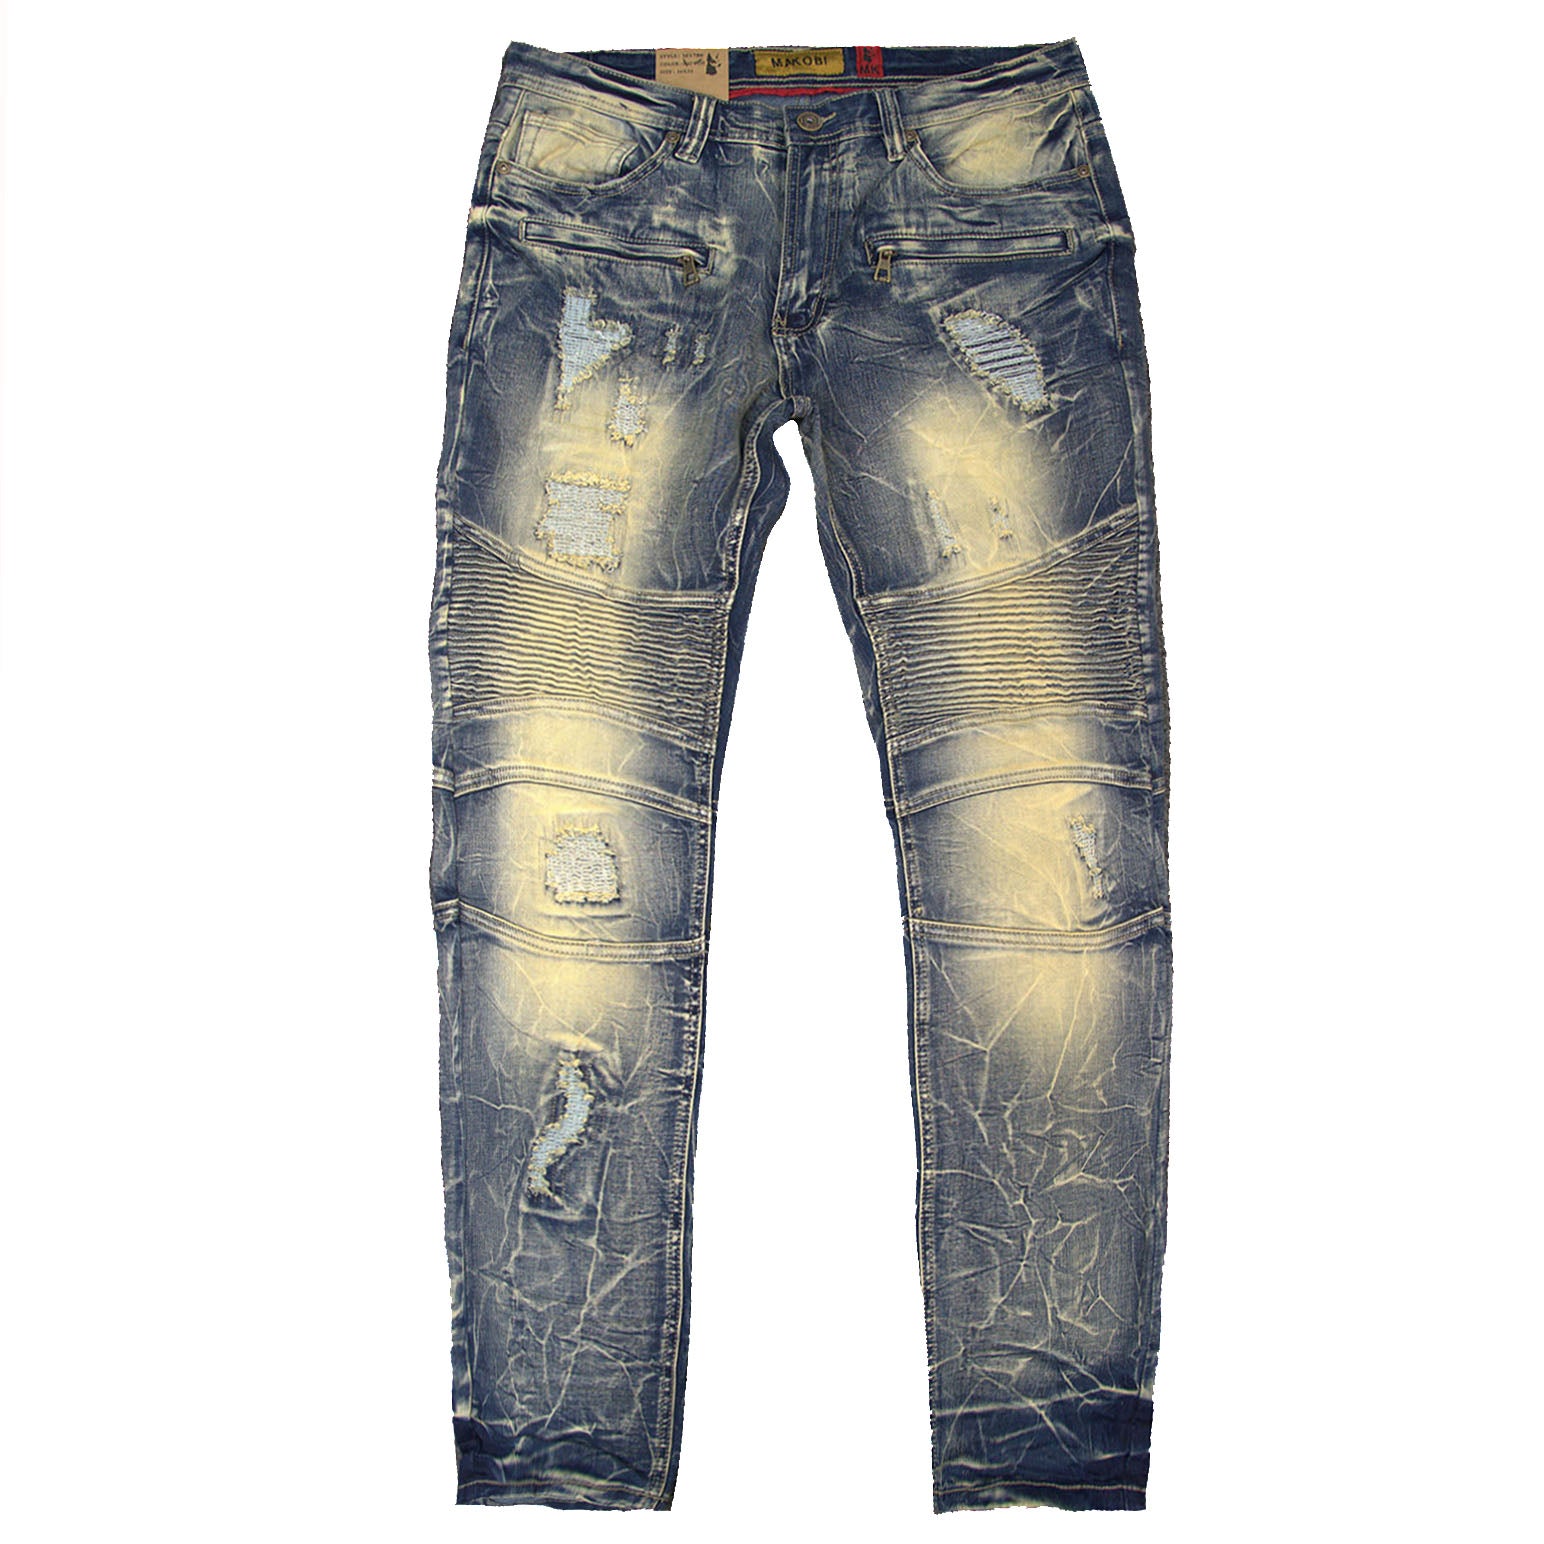 M1786 Makobi Prado Biker Jeans pẹlu Rip & Tunṣe - Idọti Wẹ